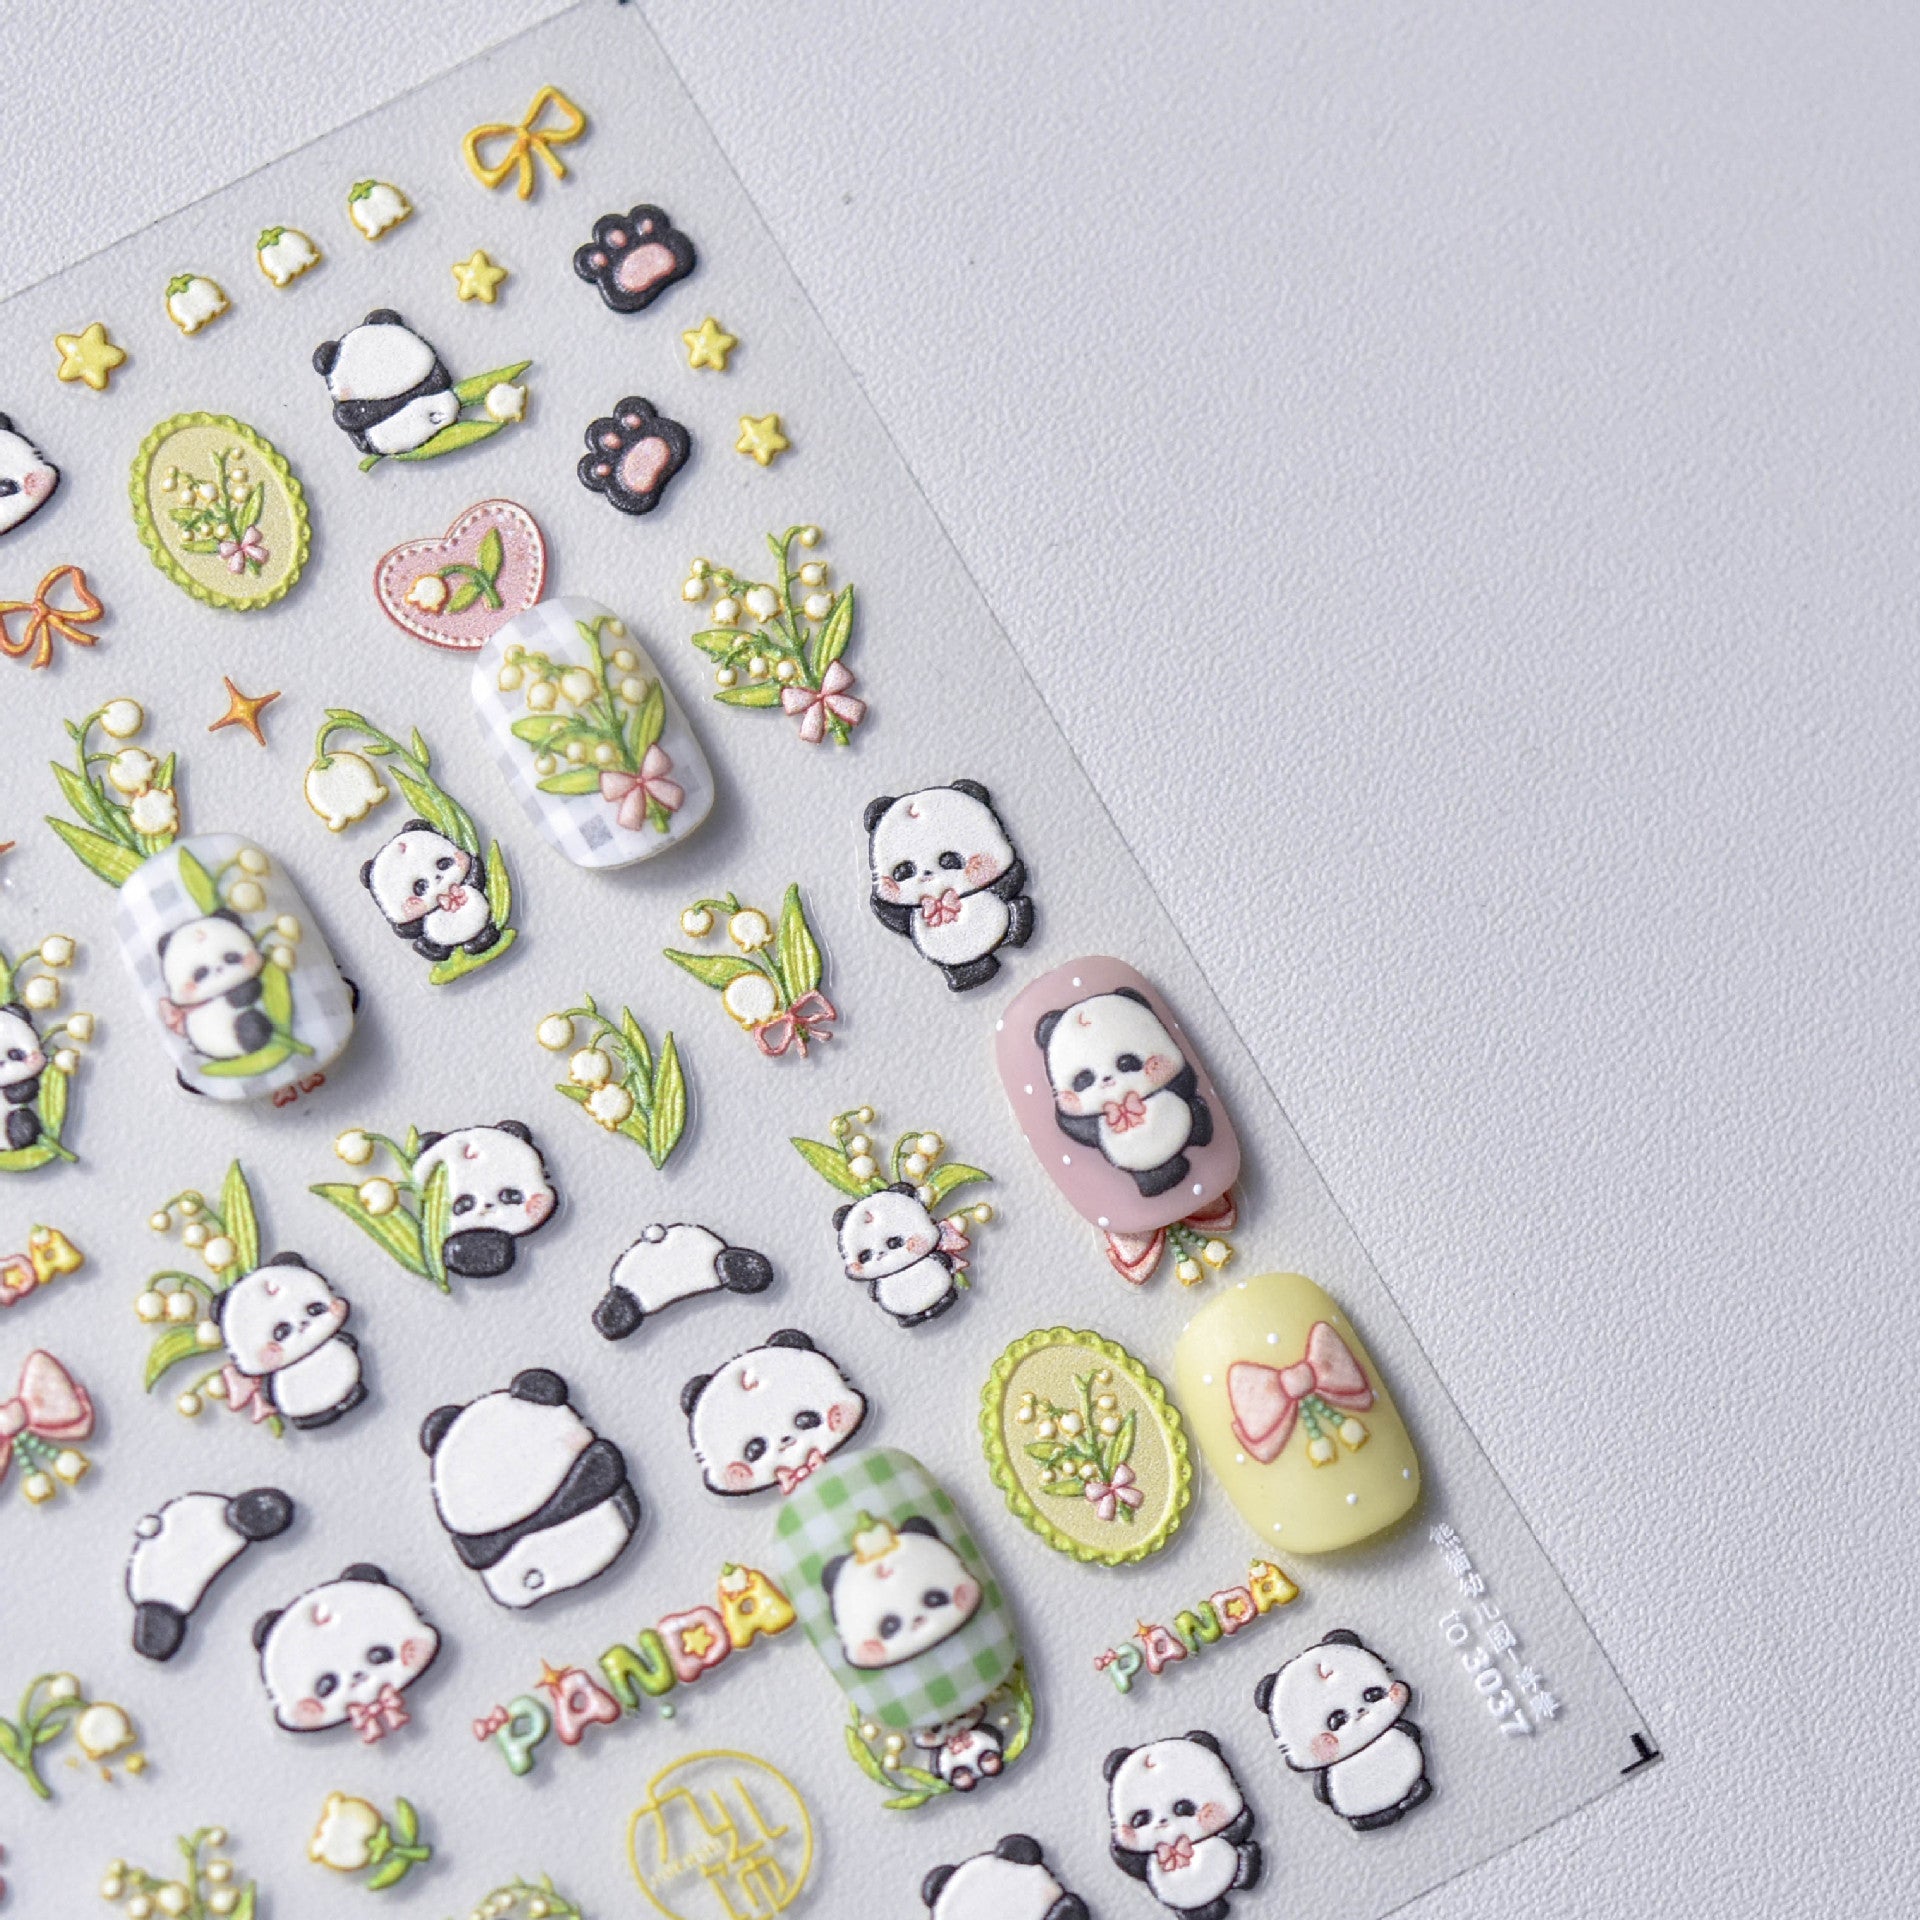 NailMAD Cartoon Frog Nail Art Stickers Adhesive Embossed Bear Panda Sticker Decals to3004